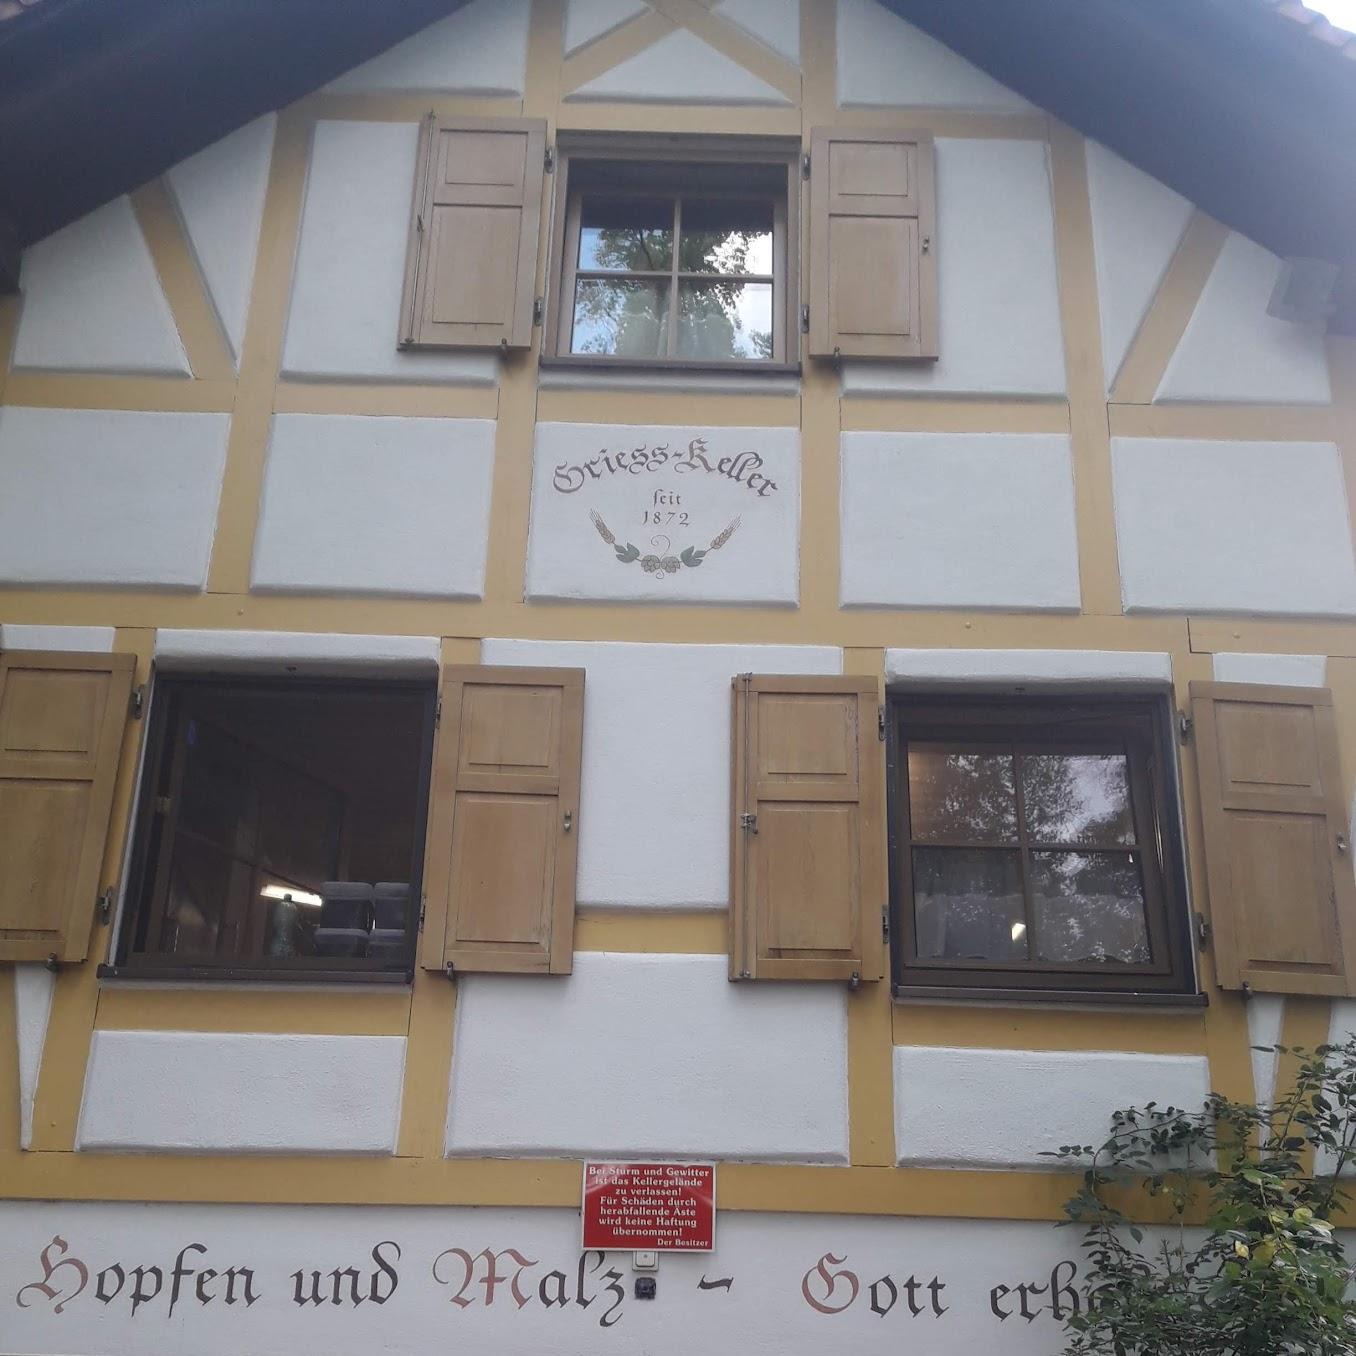 Restaurant "Griess Keller" in Strullendorf